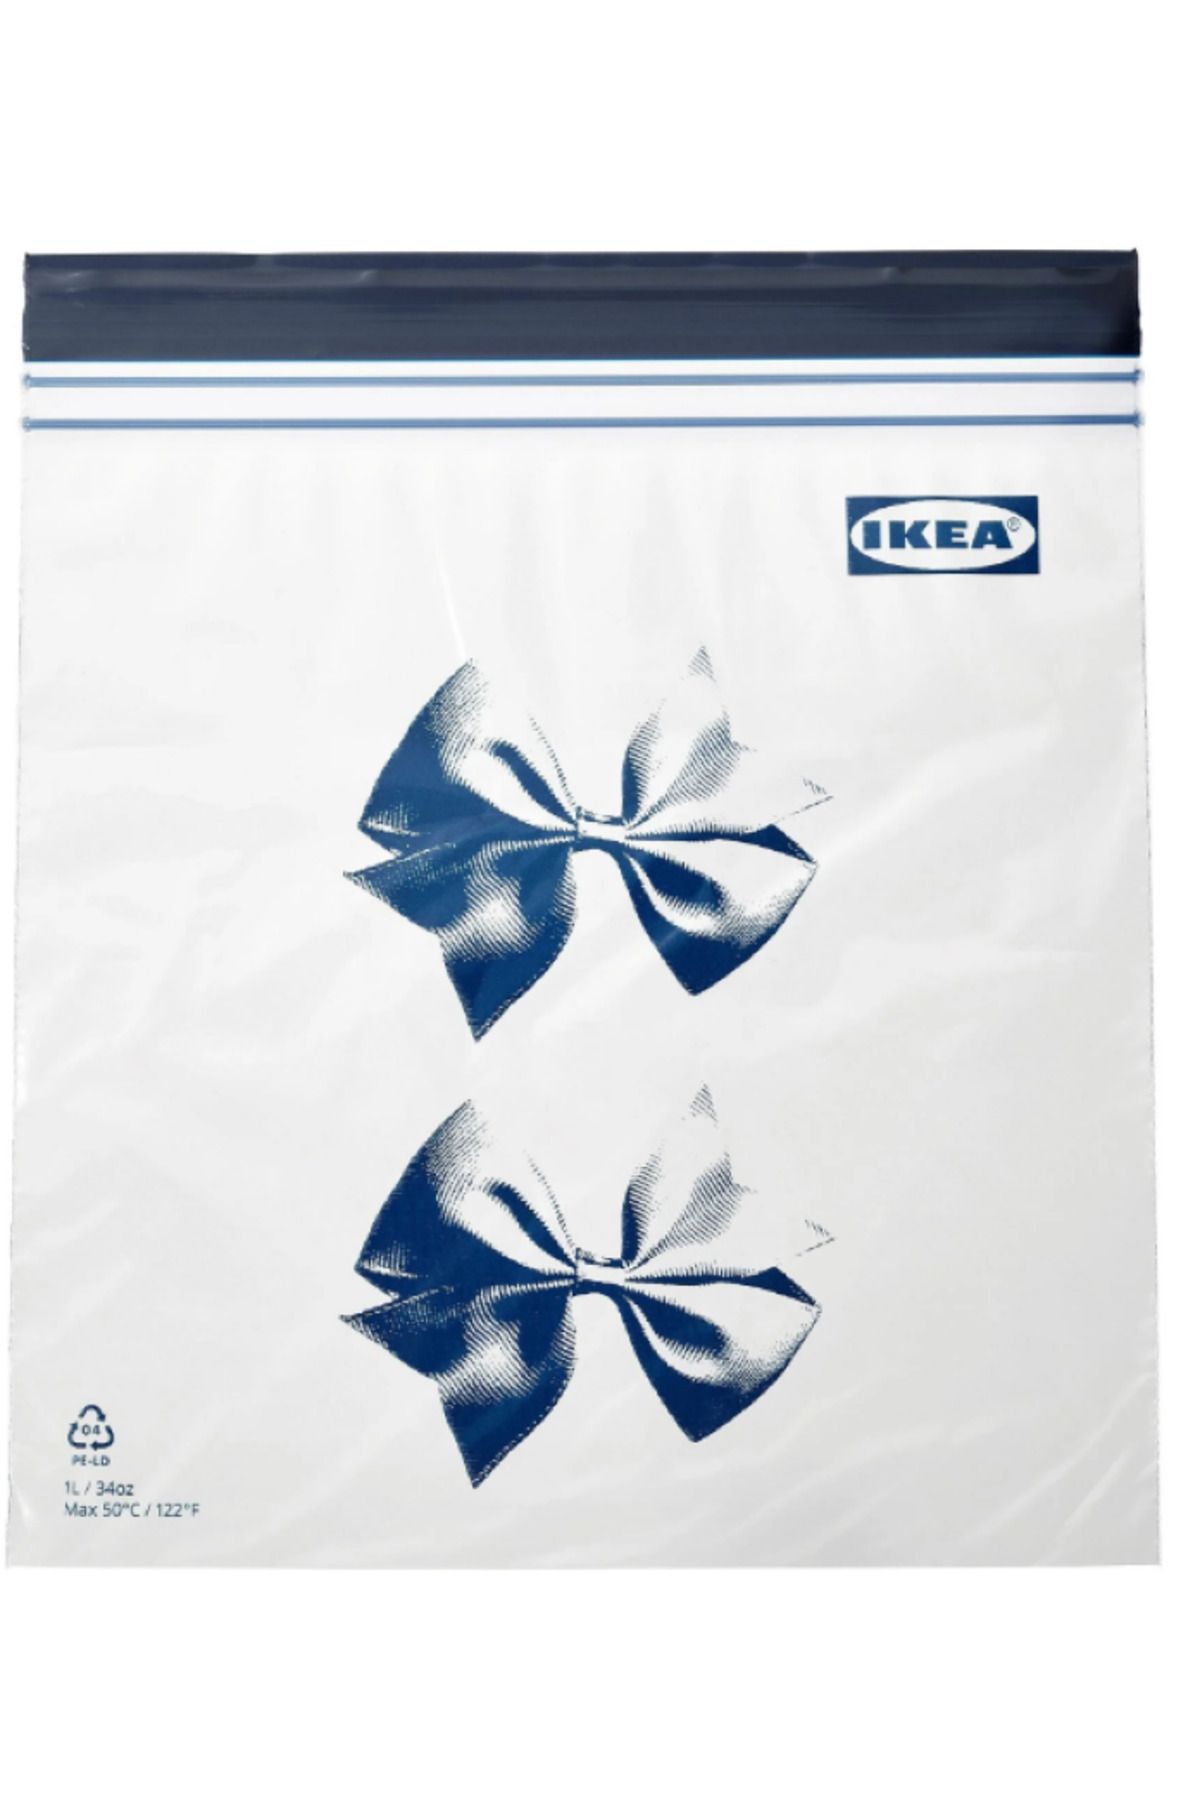 IKEA Istad Kilitlenebilir Buzdolabı Poşeti Mavi Papyon Desenli, 25 Adet 1 Litre